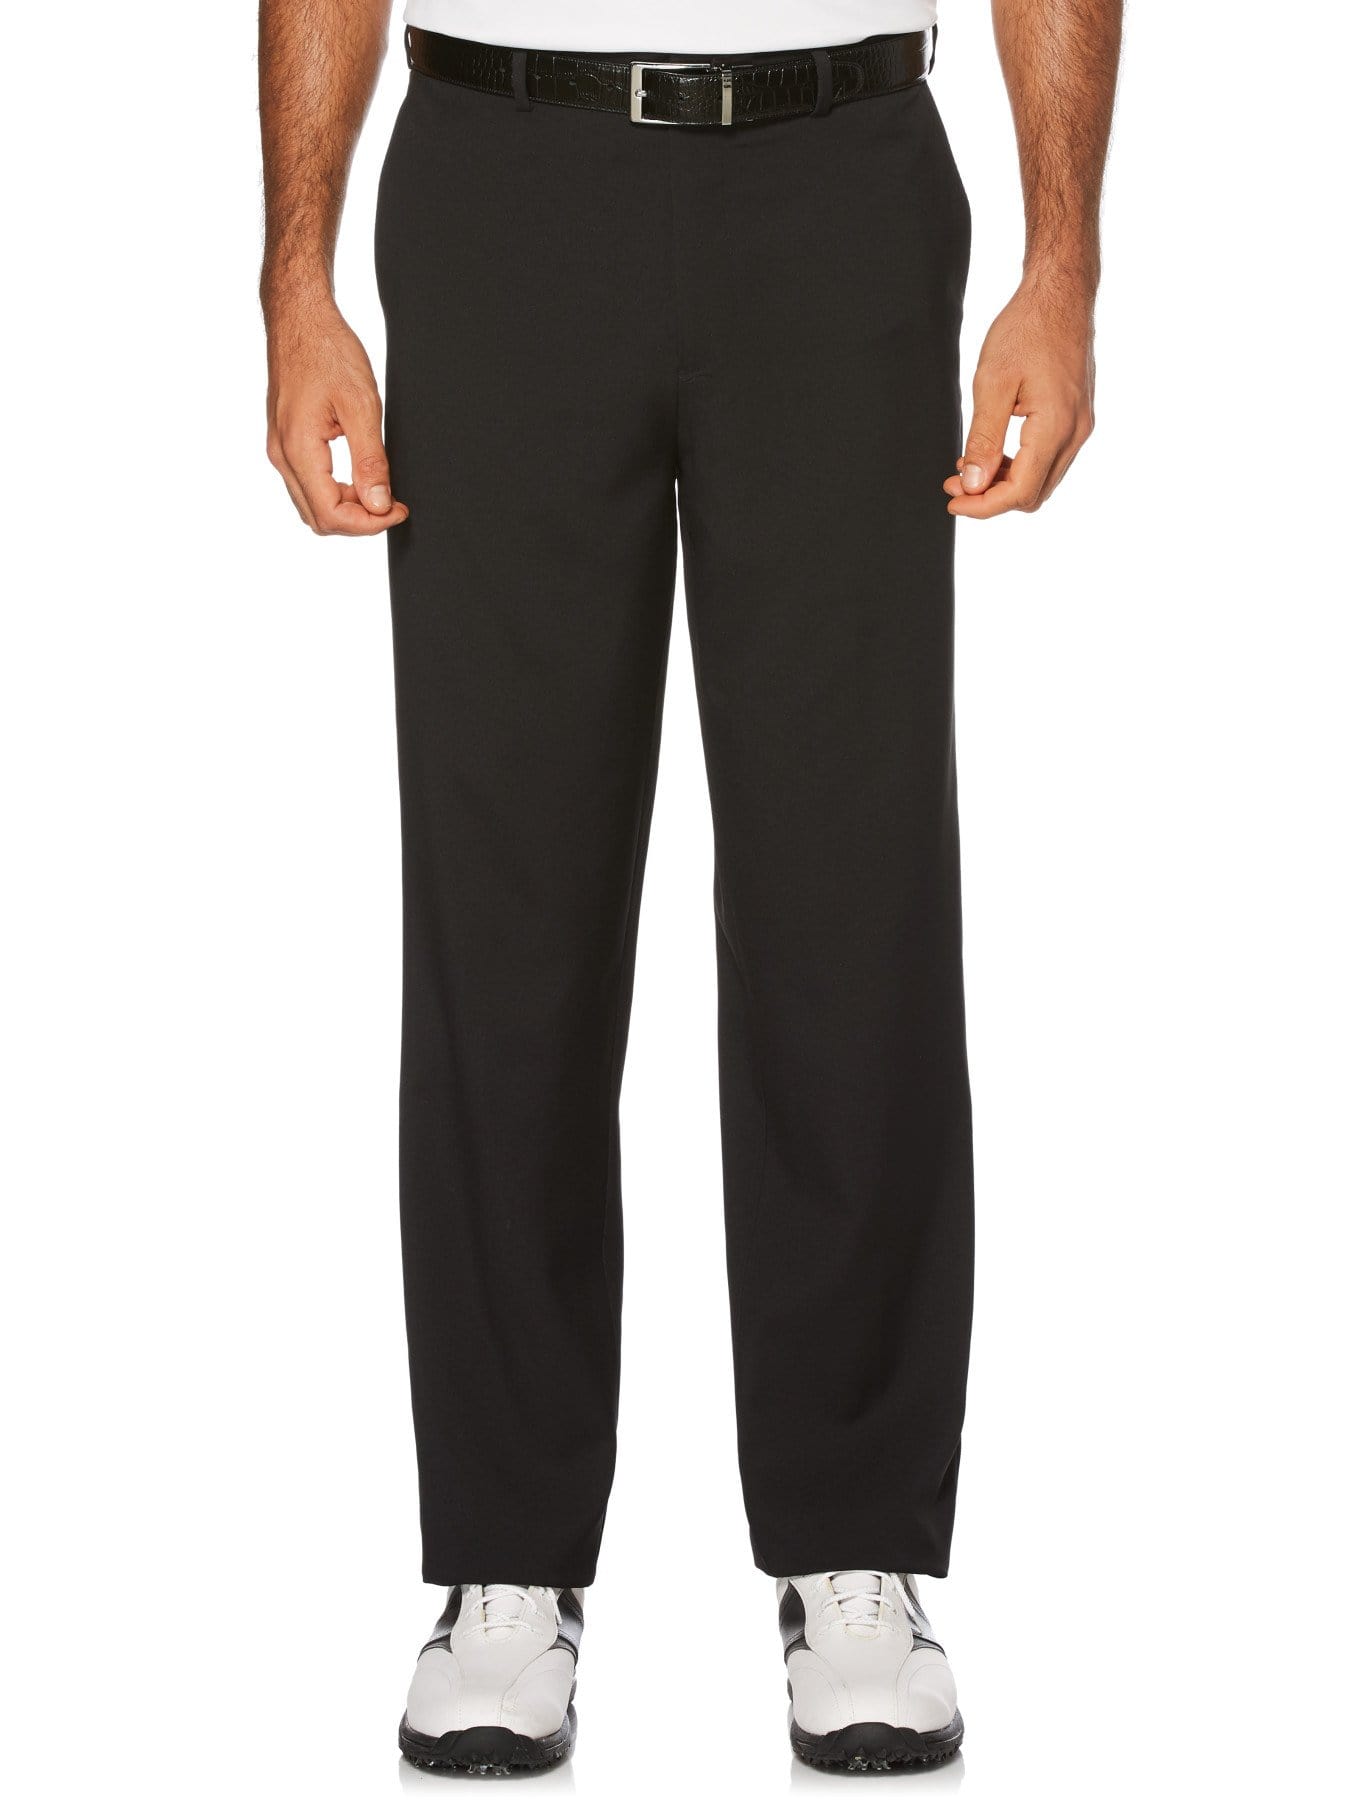 Stretch Waterproof 5-pocket Thick Travel Pants, Golf Pants, Work Pants